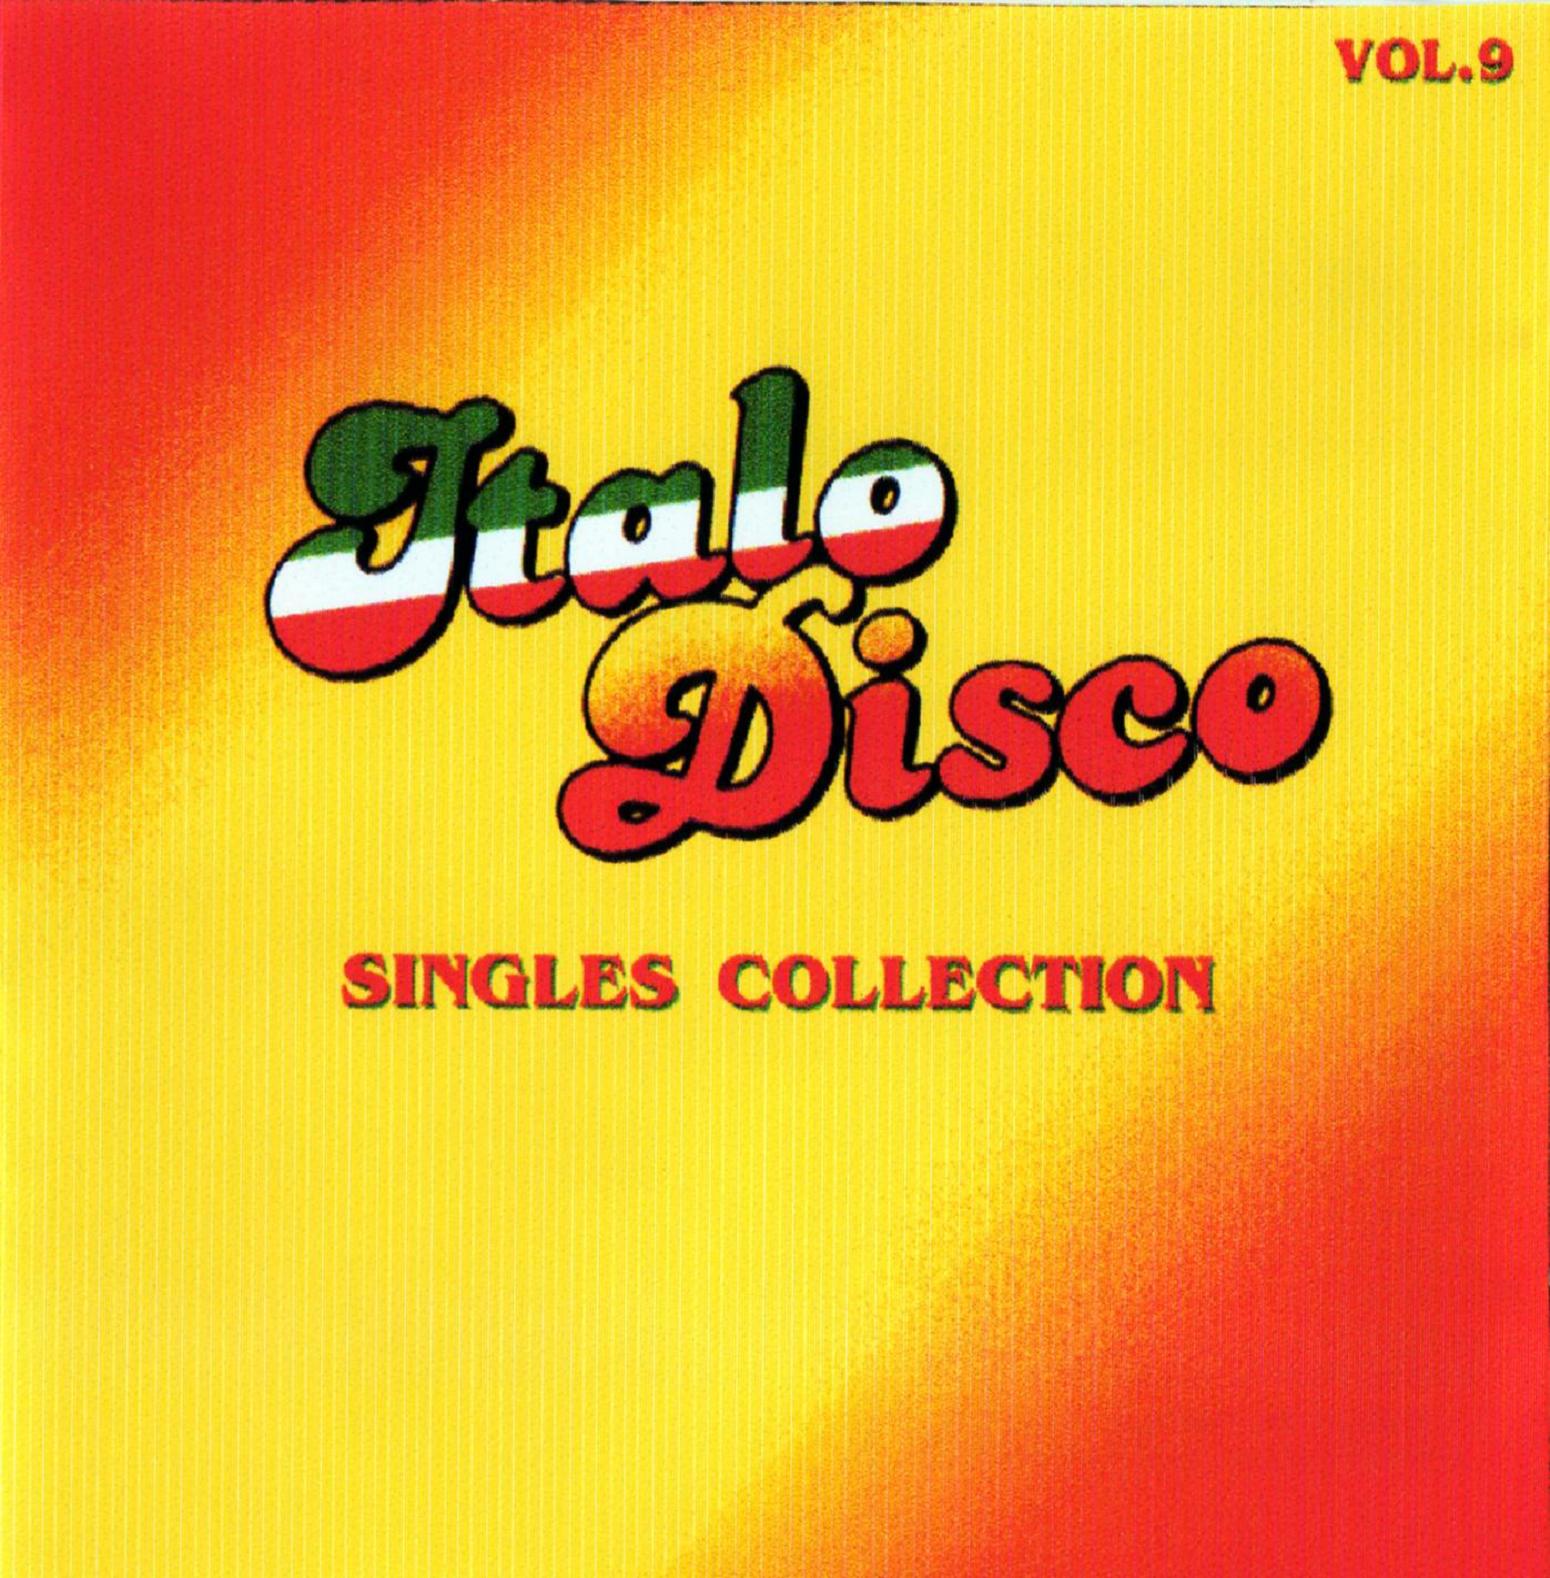 Итальянский диско слушать. Итало диско. The best of Italo Disco обложки. Итальянское диско. Disco обложка.